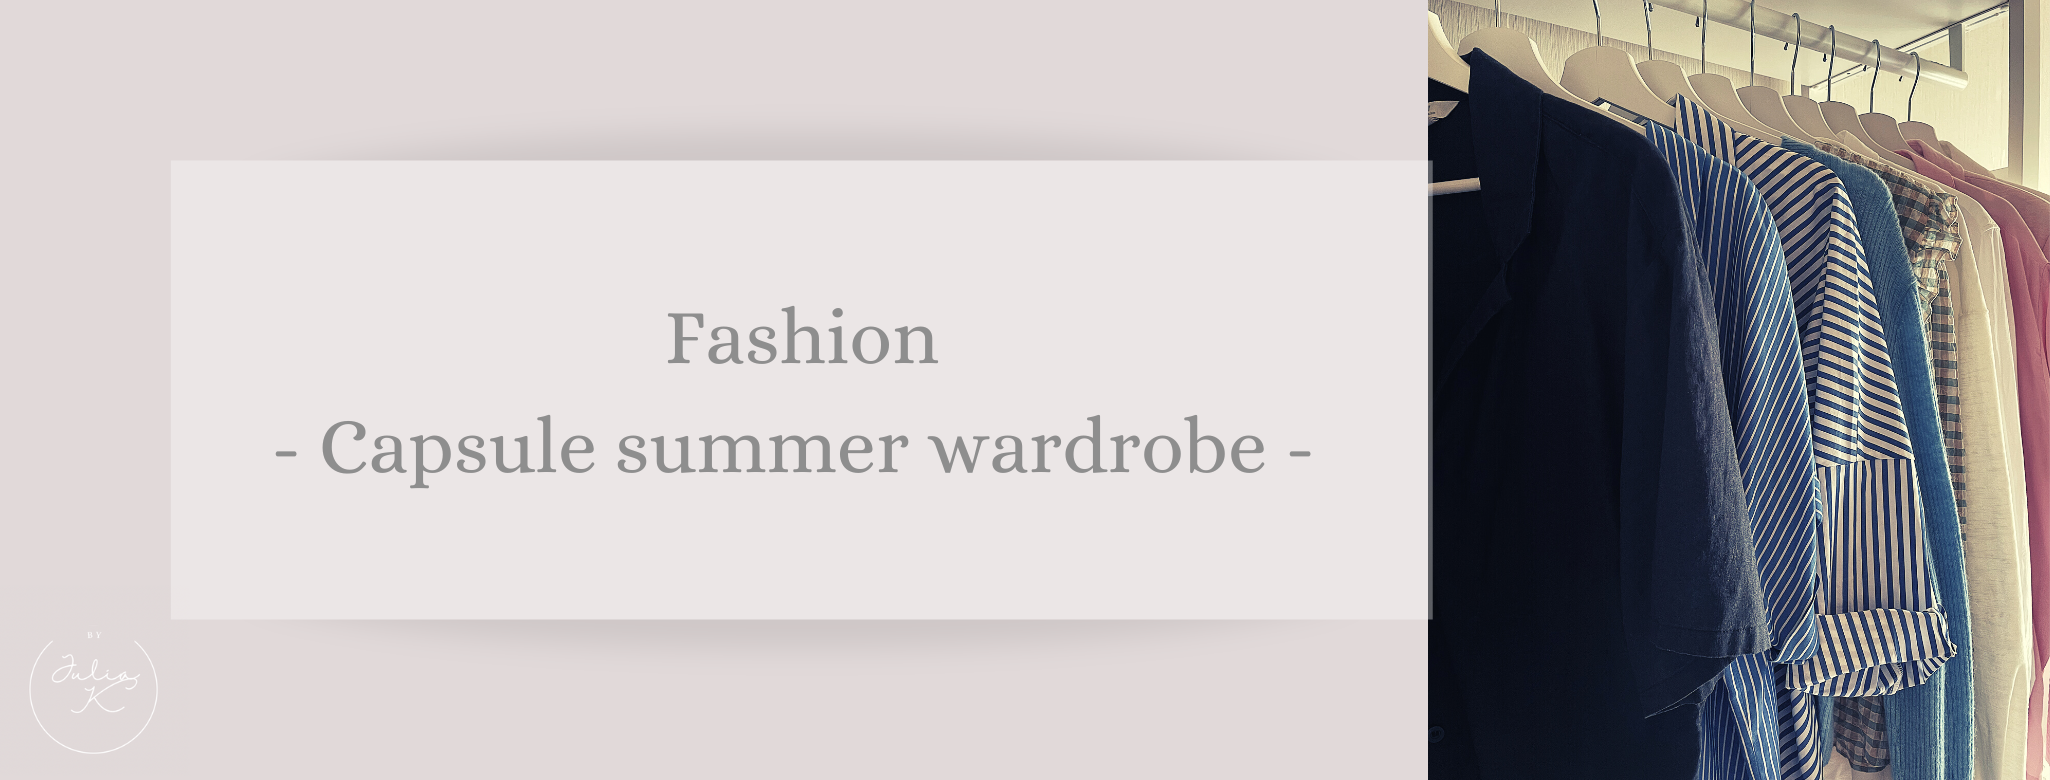 Fashion: My capsule summer wardrobe